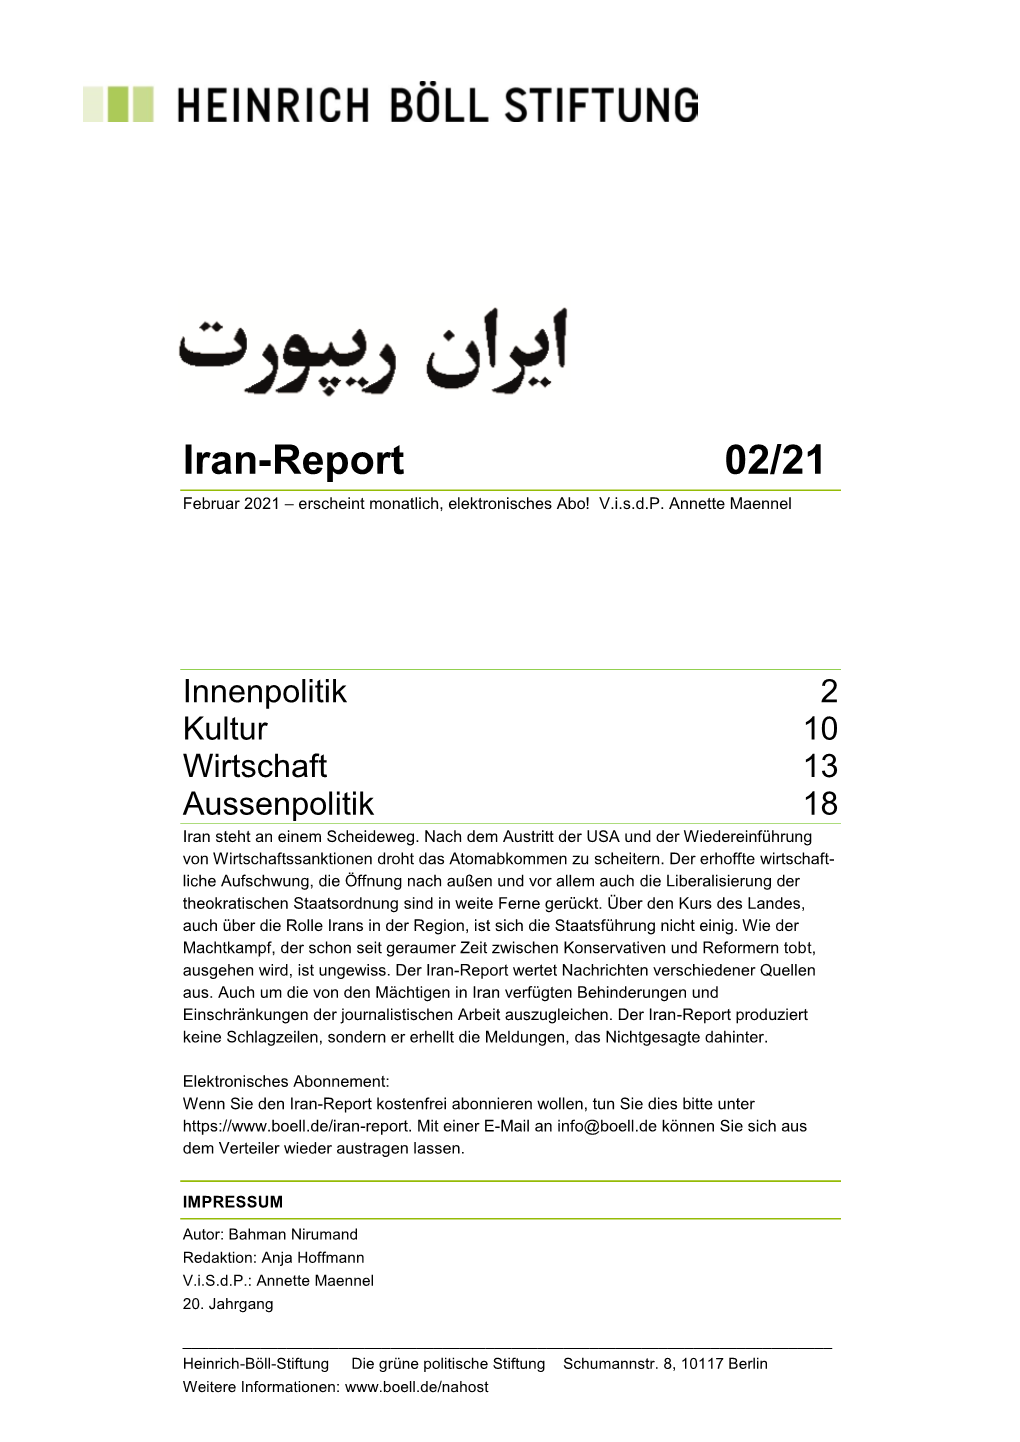 Iran-Report 02/21 Februar 2021 – Erscheint Monatlich, Elektronisches Abo! V.I.S.D.P